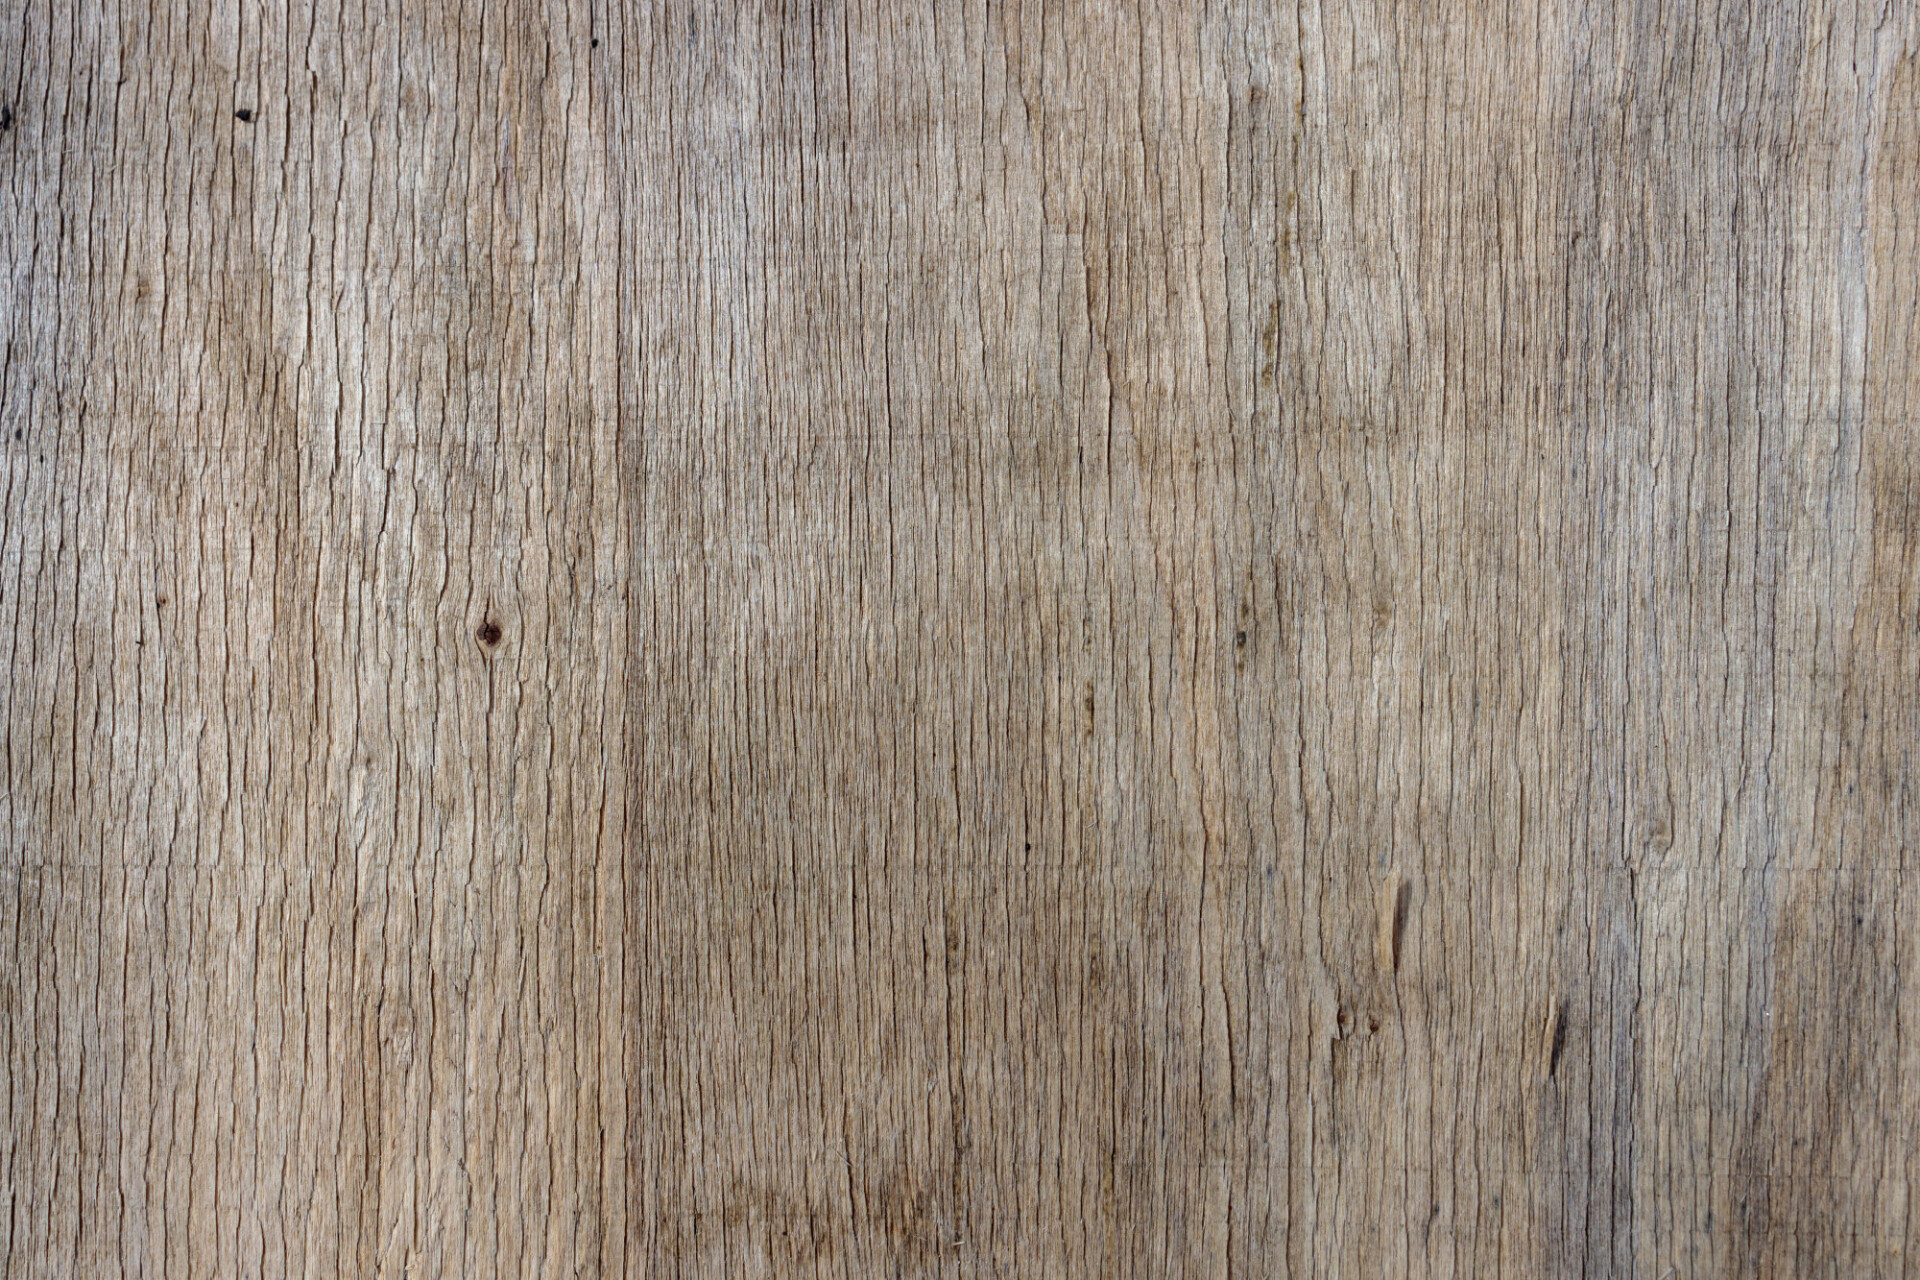 Brownish wood panel texture